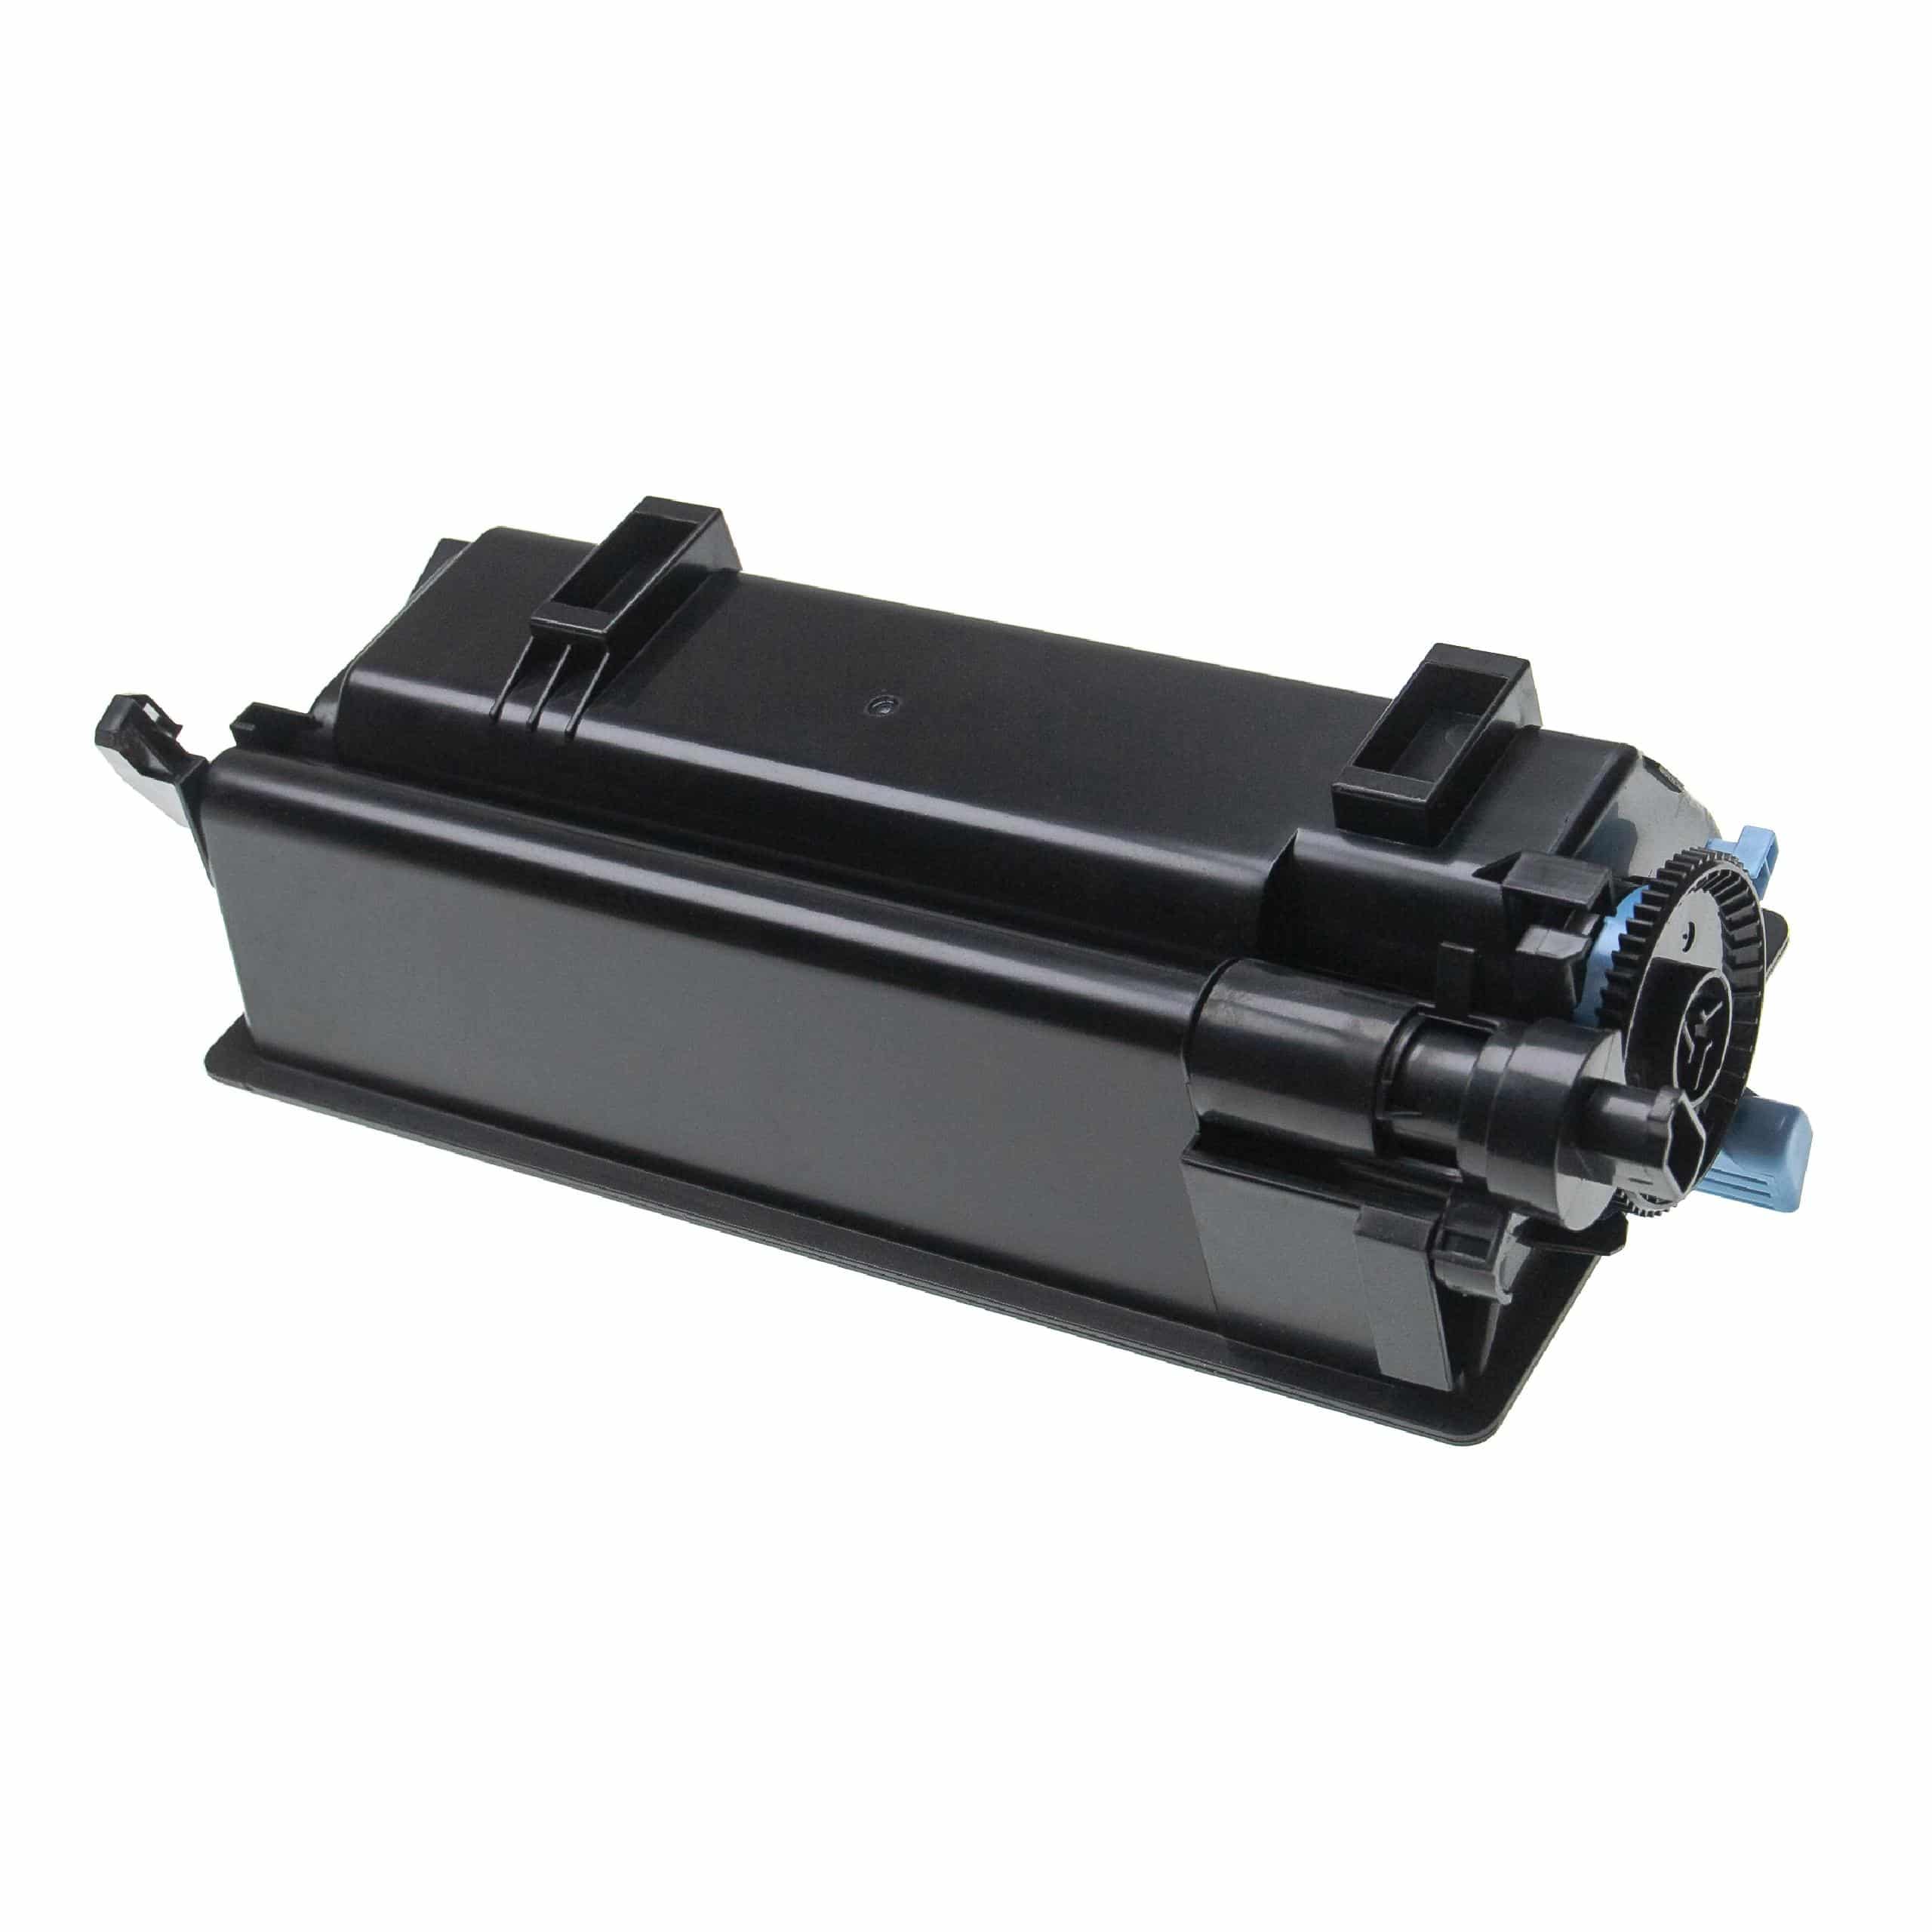 5x Toner replaces Kyocera TK-3160 for Kyocera Printer + Waste Toner Container, Black